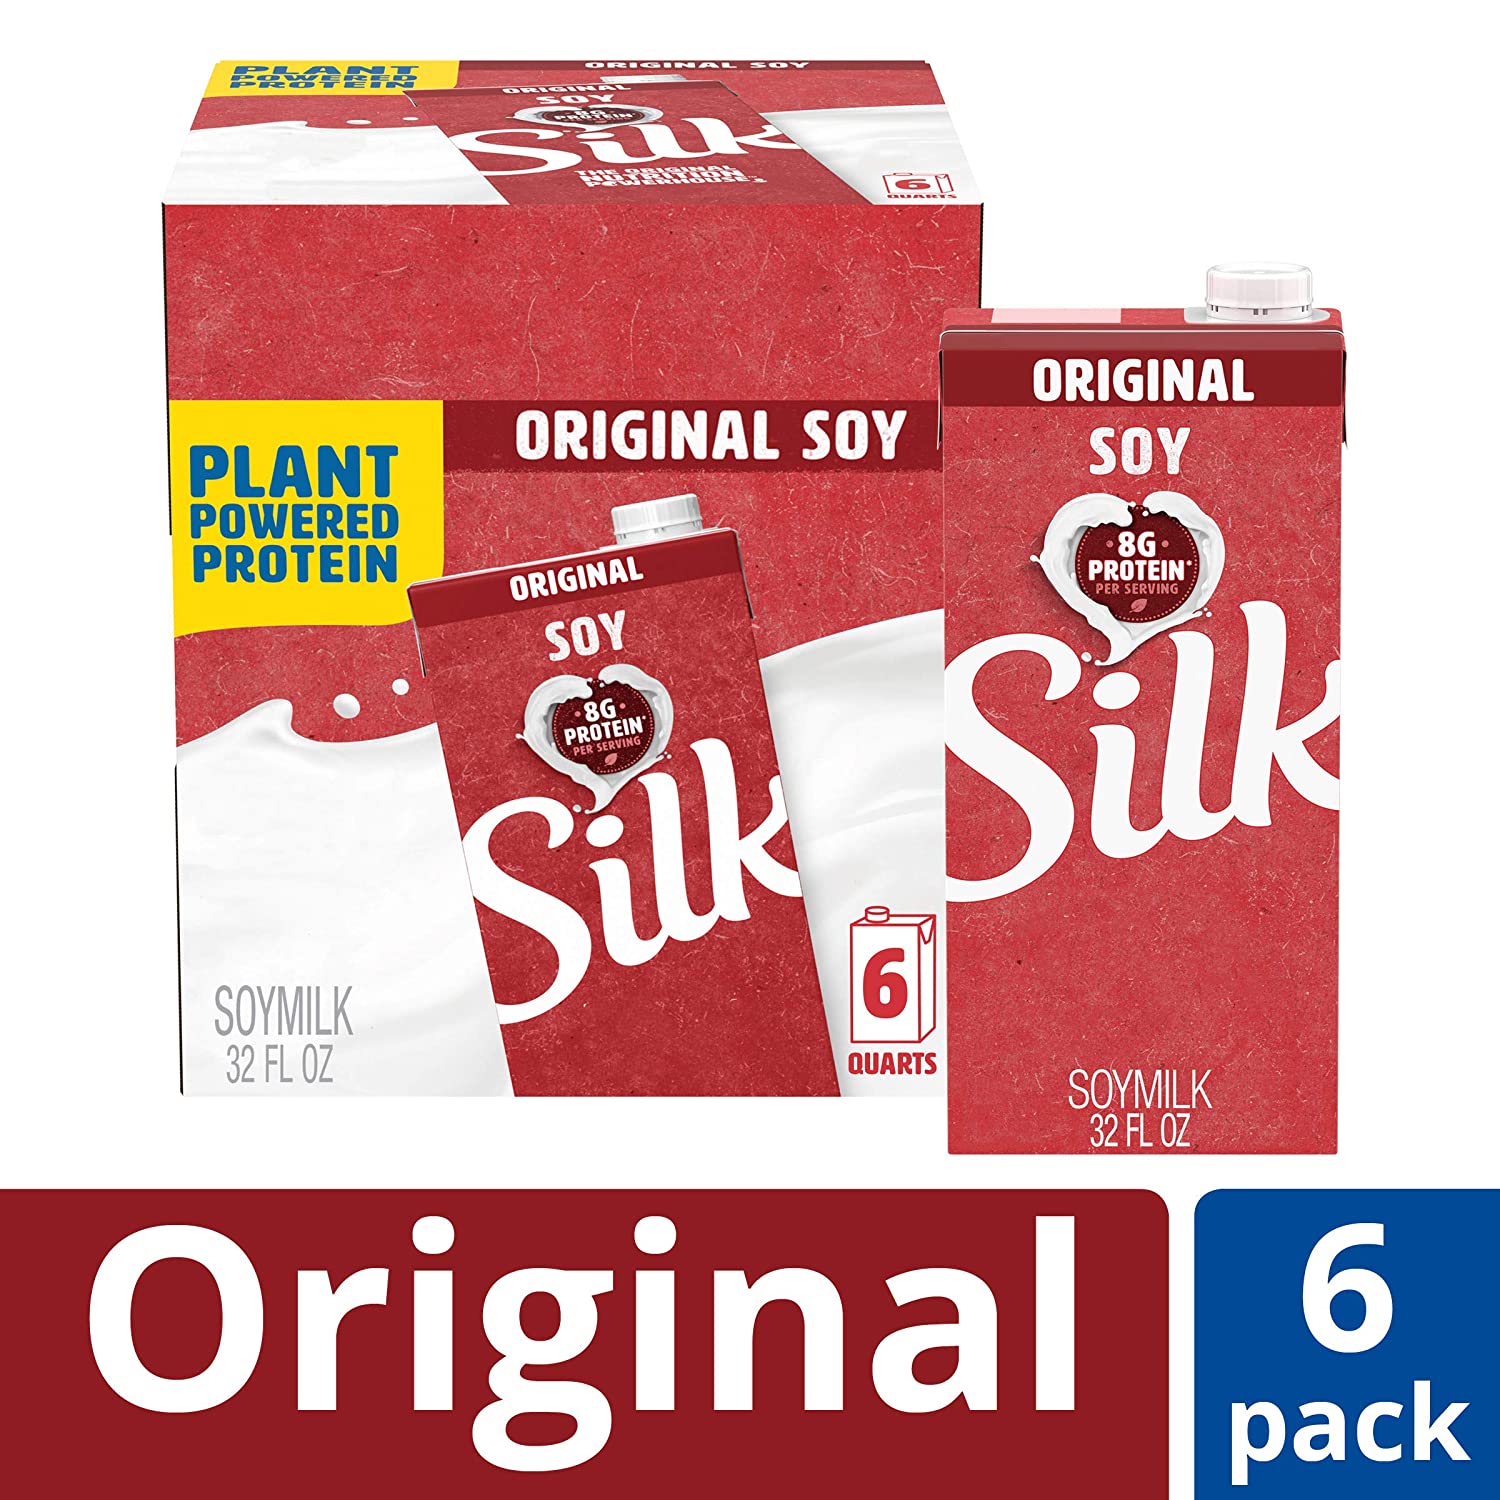 Silk Soy Creamer Original Dairy-Free Refrigerated